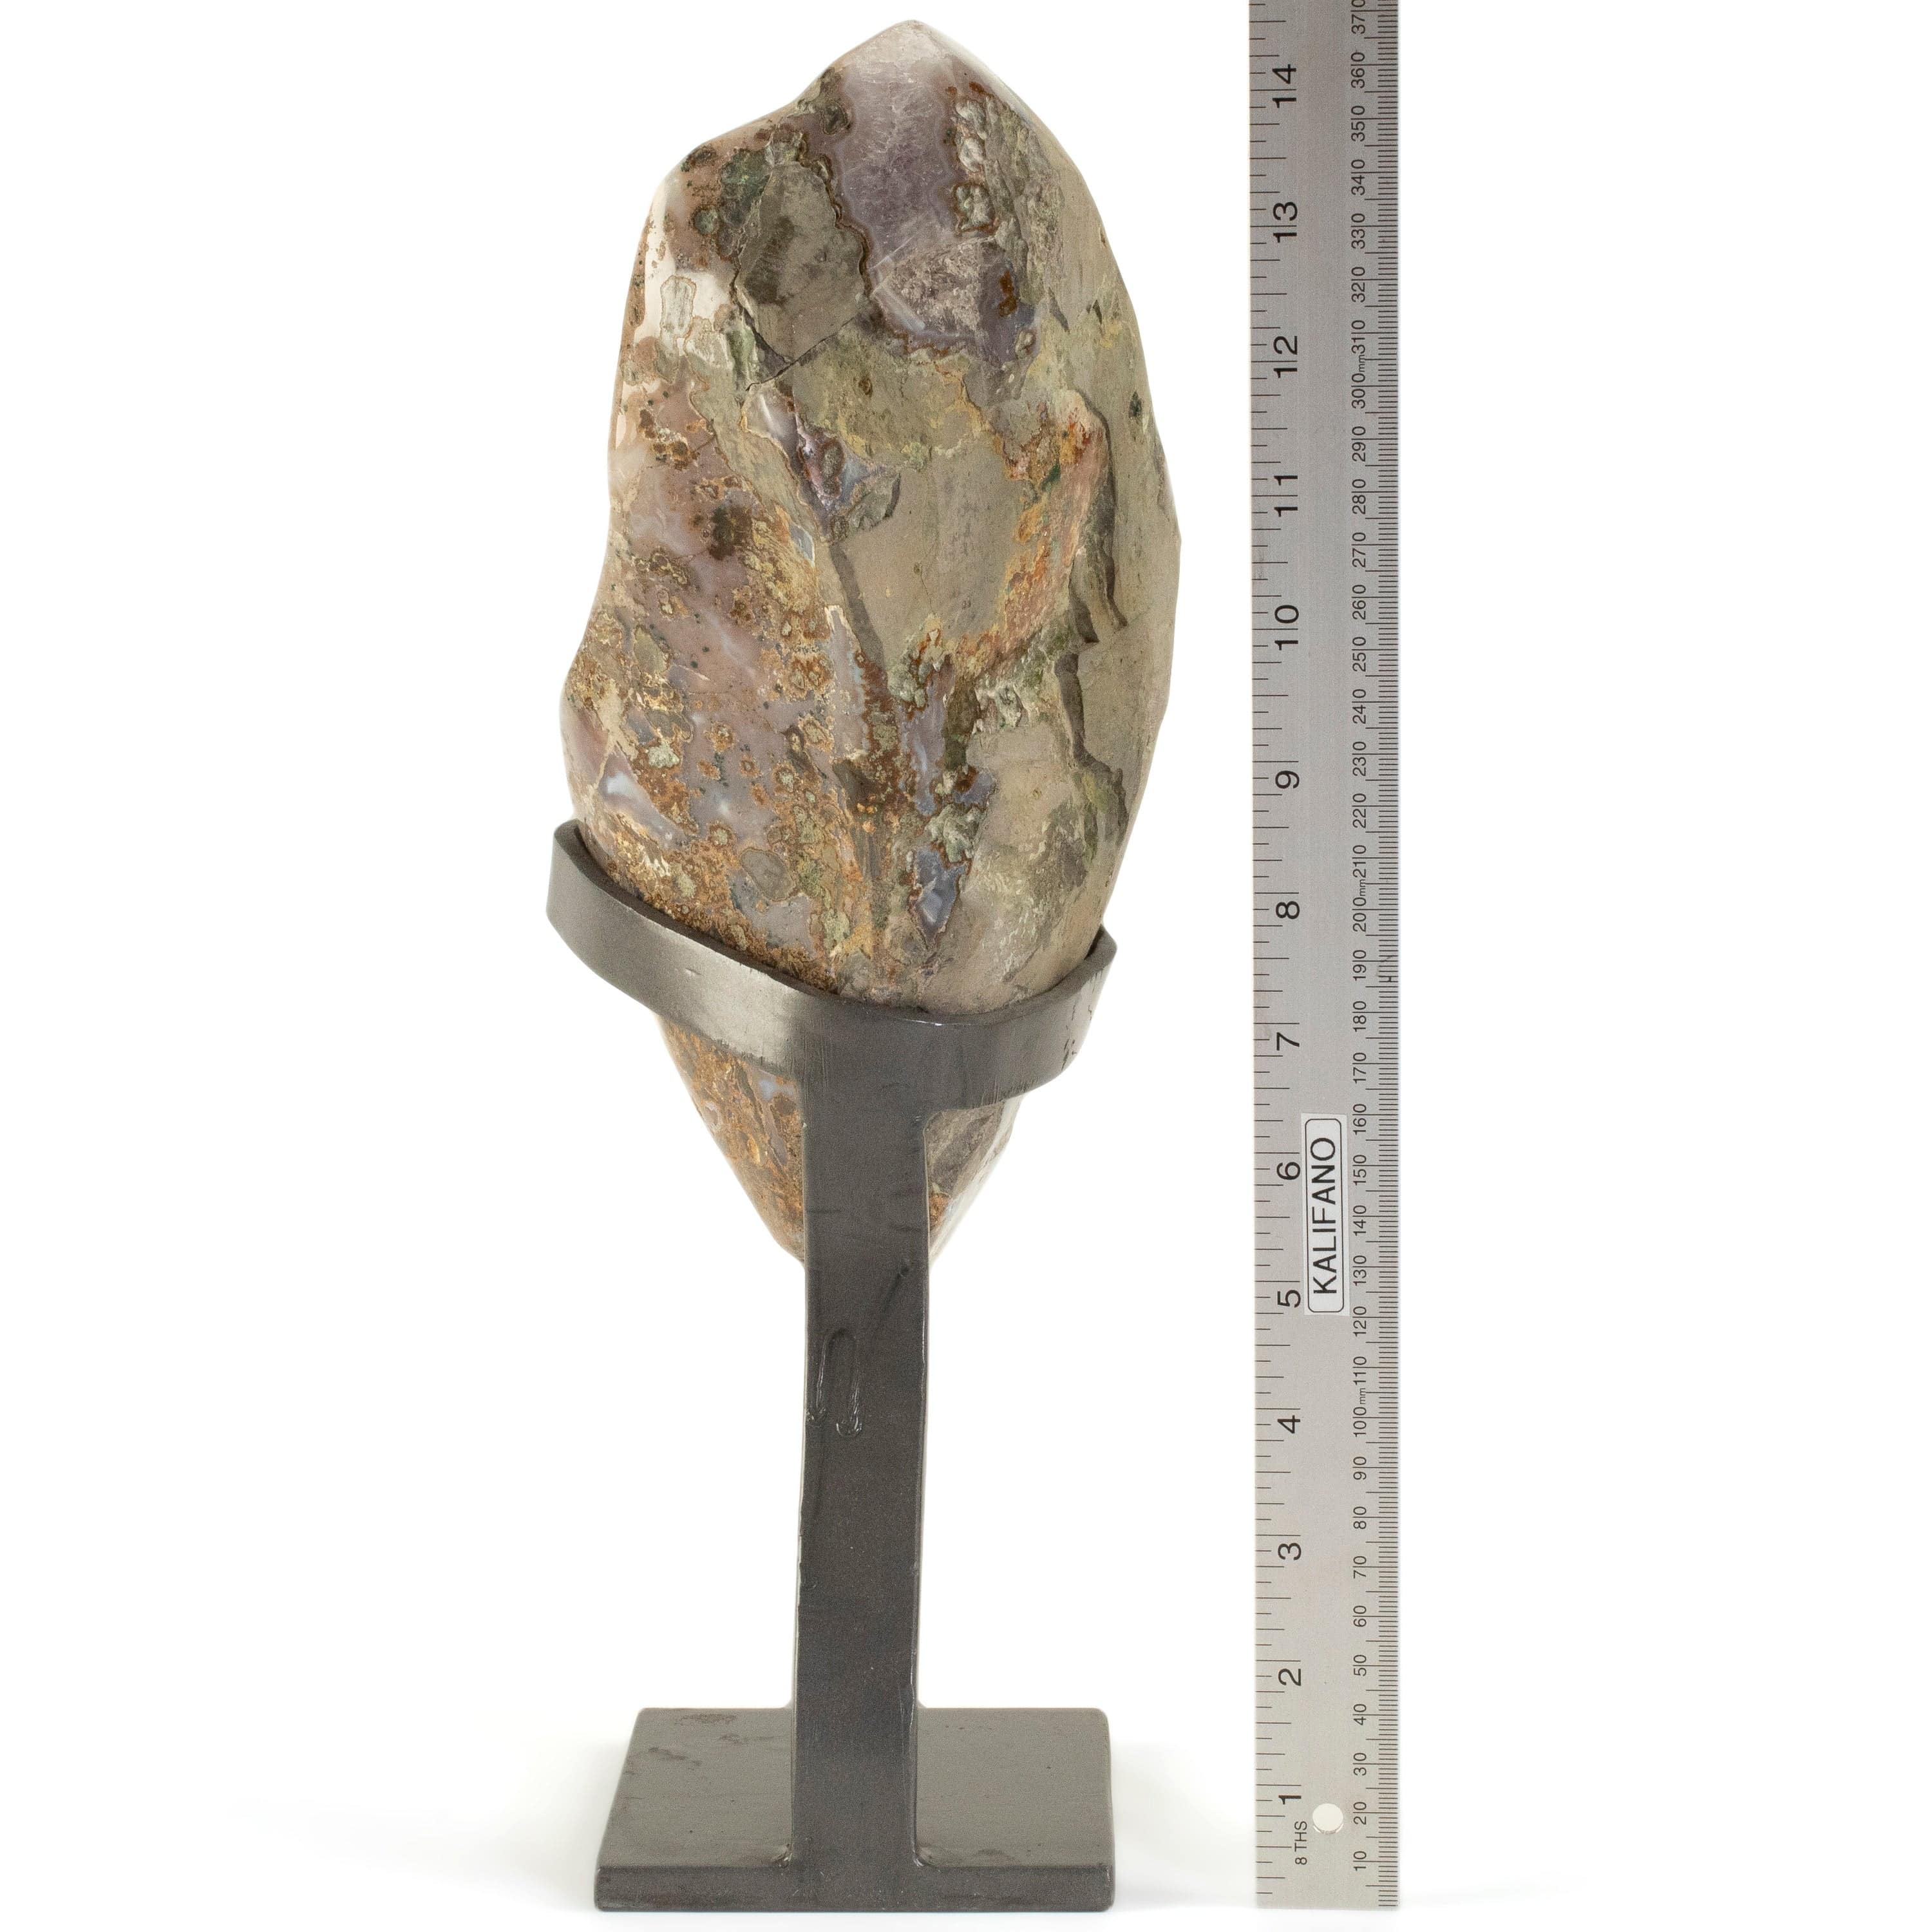 Kalifano Amethyst Uruguayan Amethyst Geode on Custom Stand - 9.2 lbs / 15 in. UAG2100.017